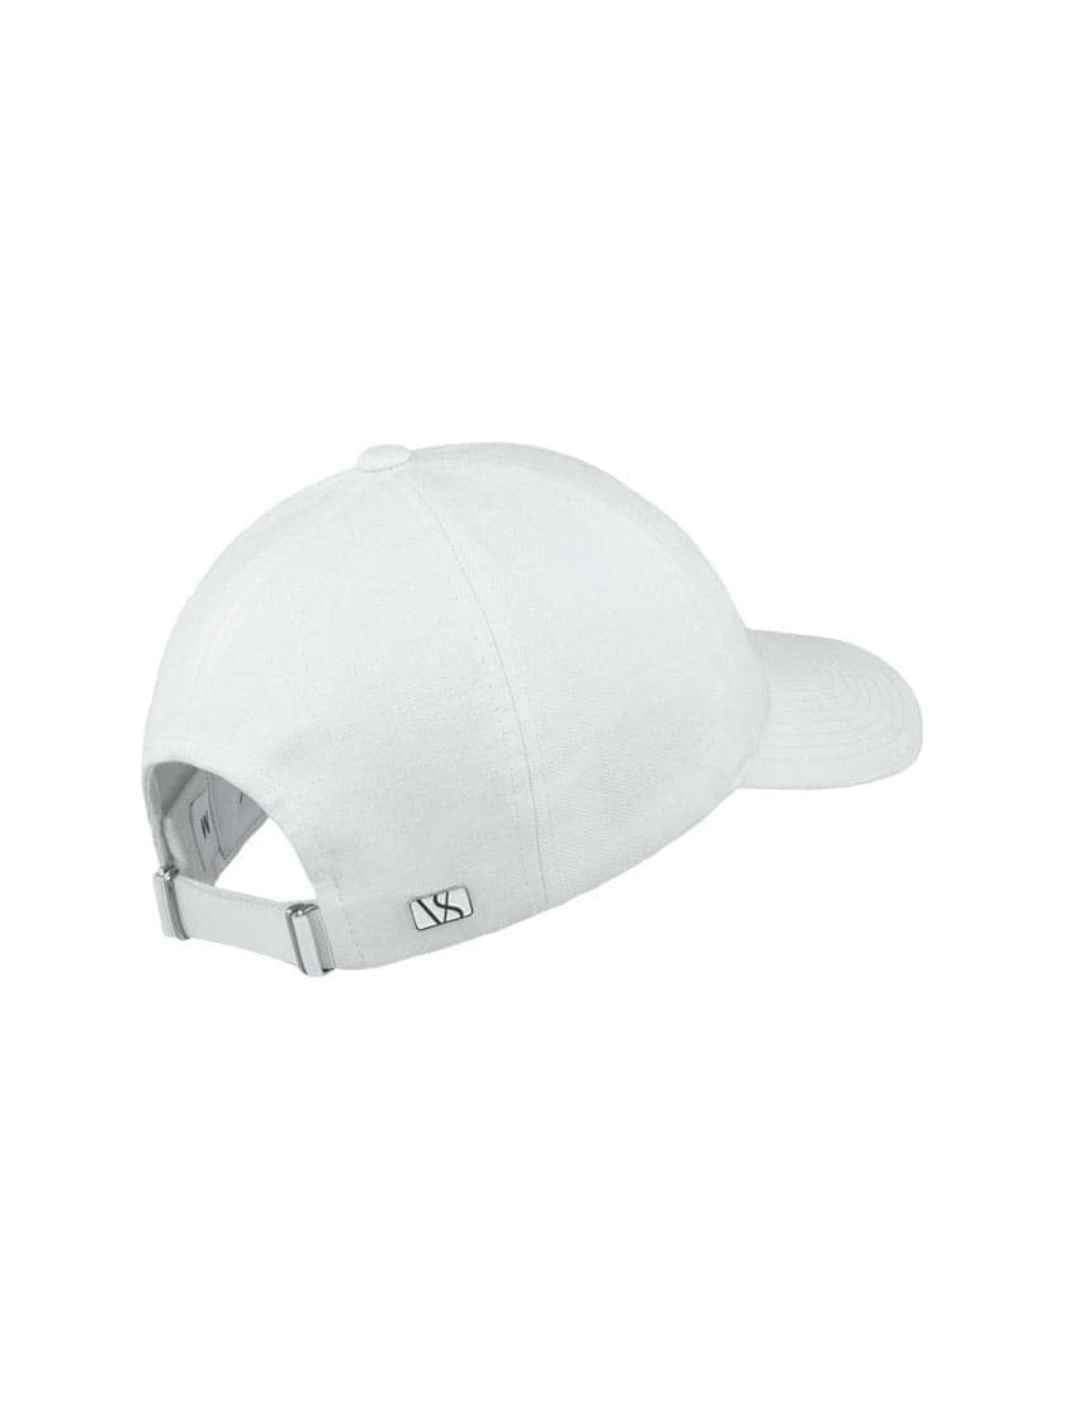 Varsity Headwear Accessories Cap | Shell White Linen